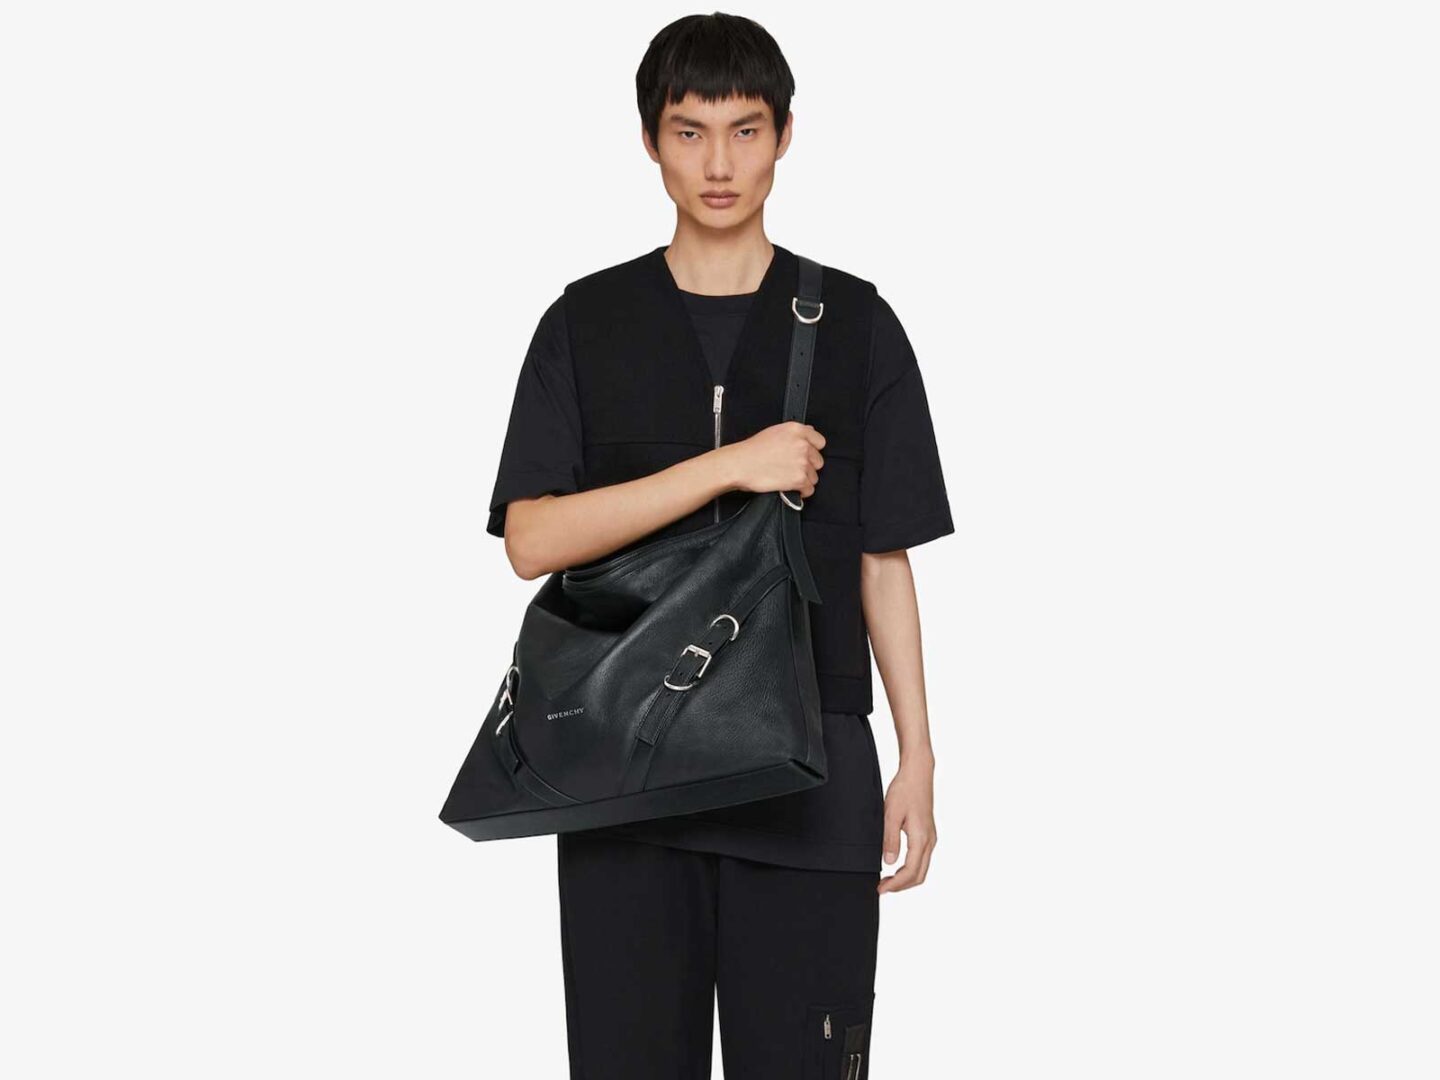 Givenchy’s Voyou bag arrives in a men’s version